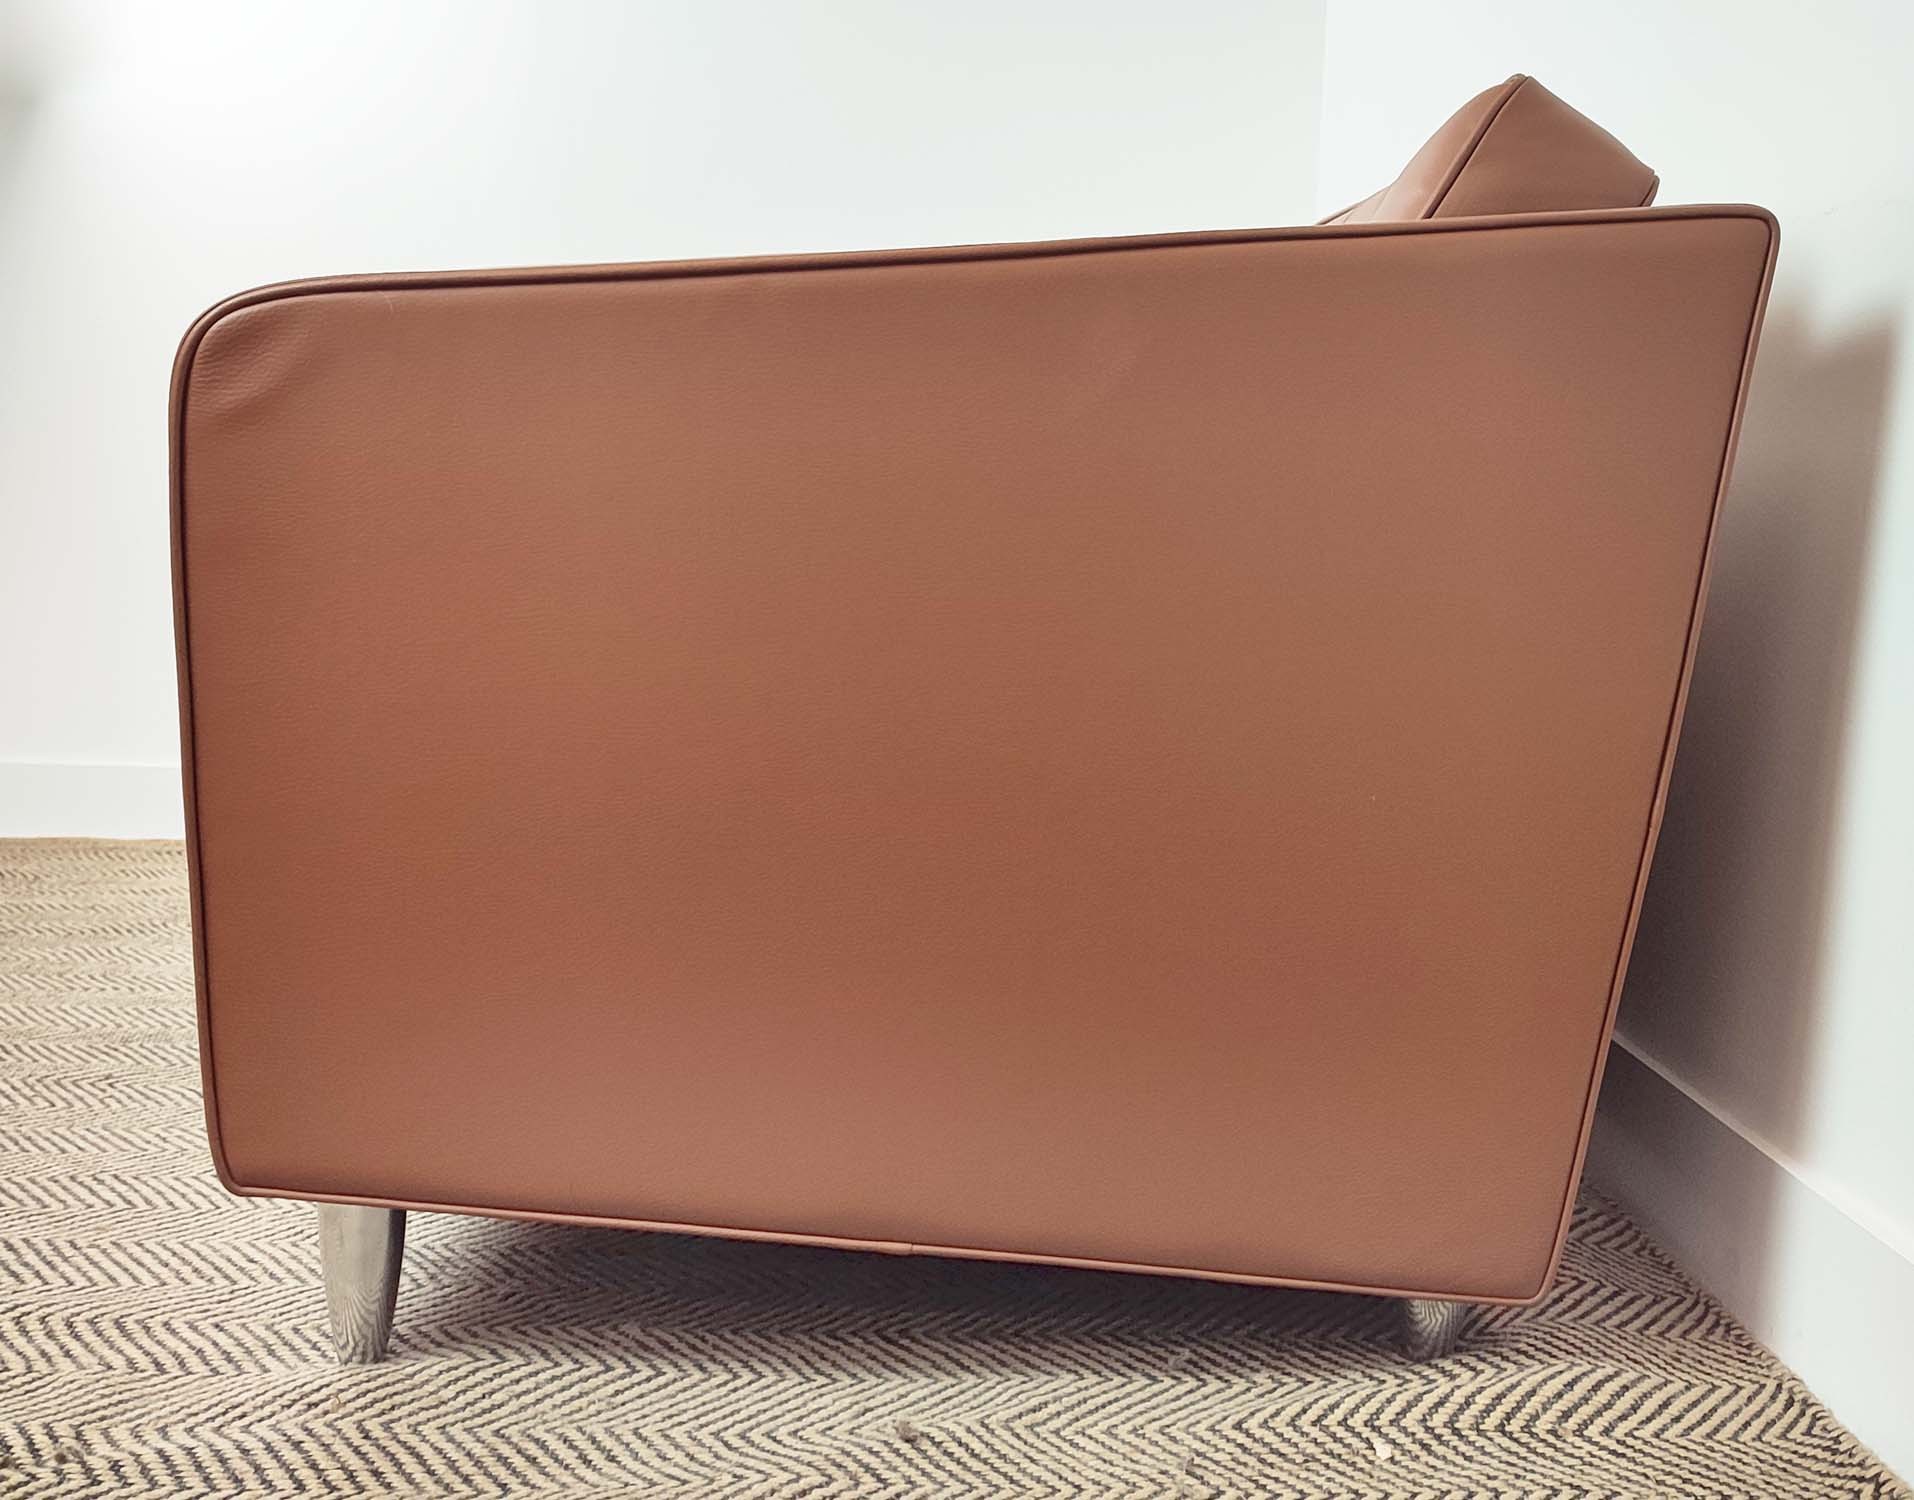 DAVISON HIGHLY SOFA, 142.5cm, tan leather. - Image 4 of 7